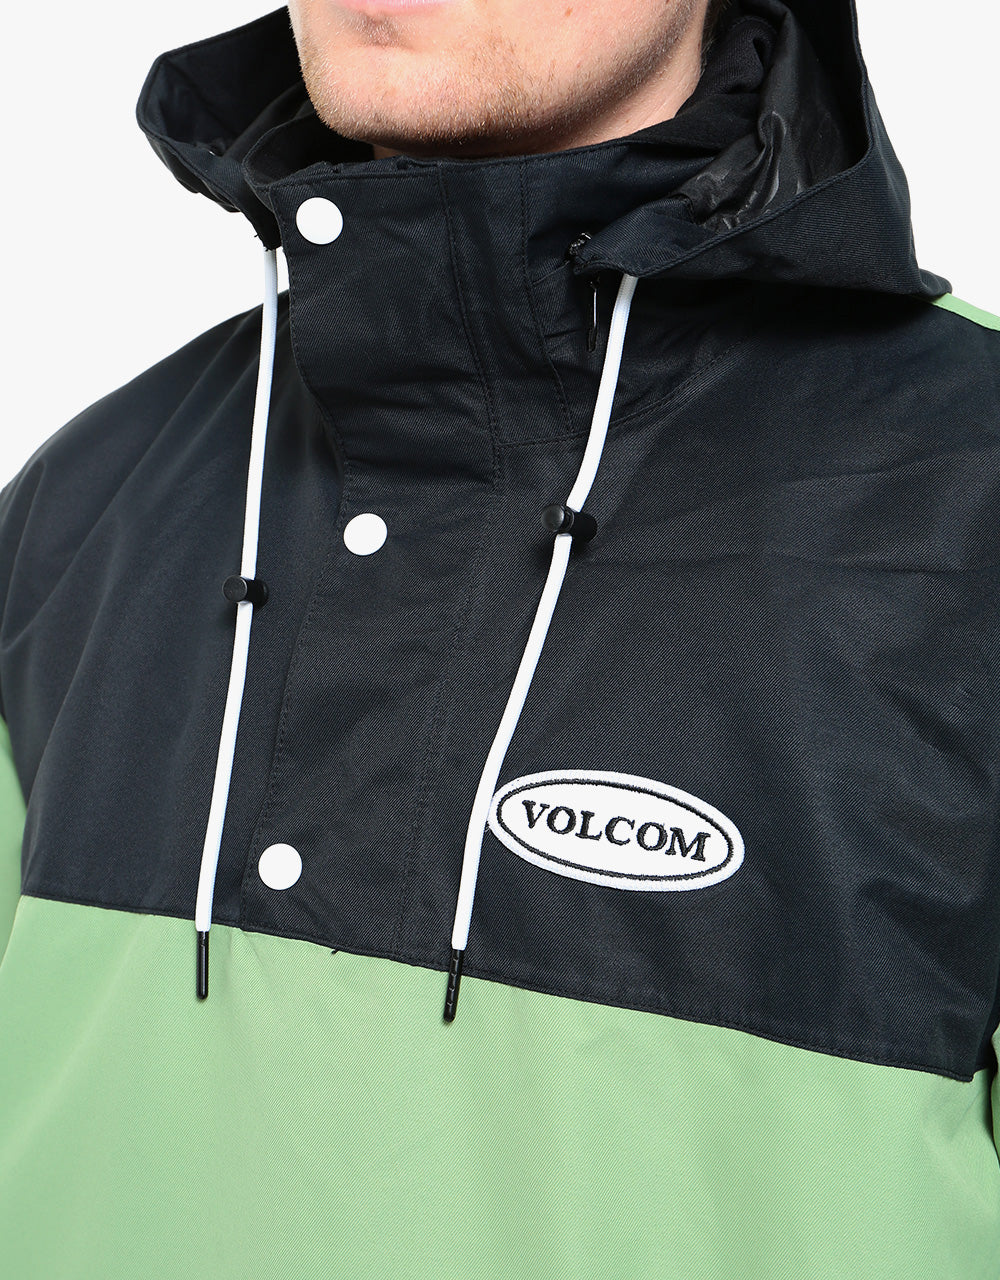 Volcom Longo Pullover Snowboard Jacket - Jade